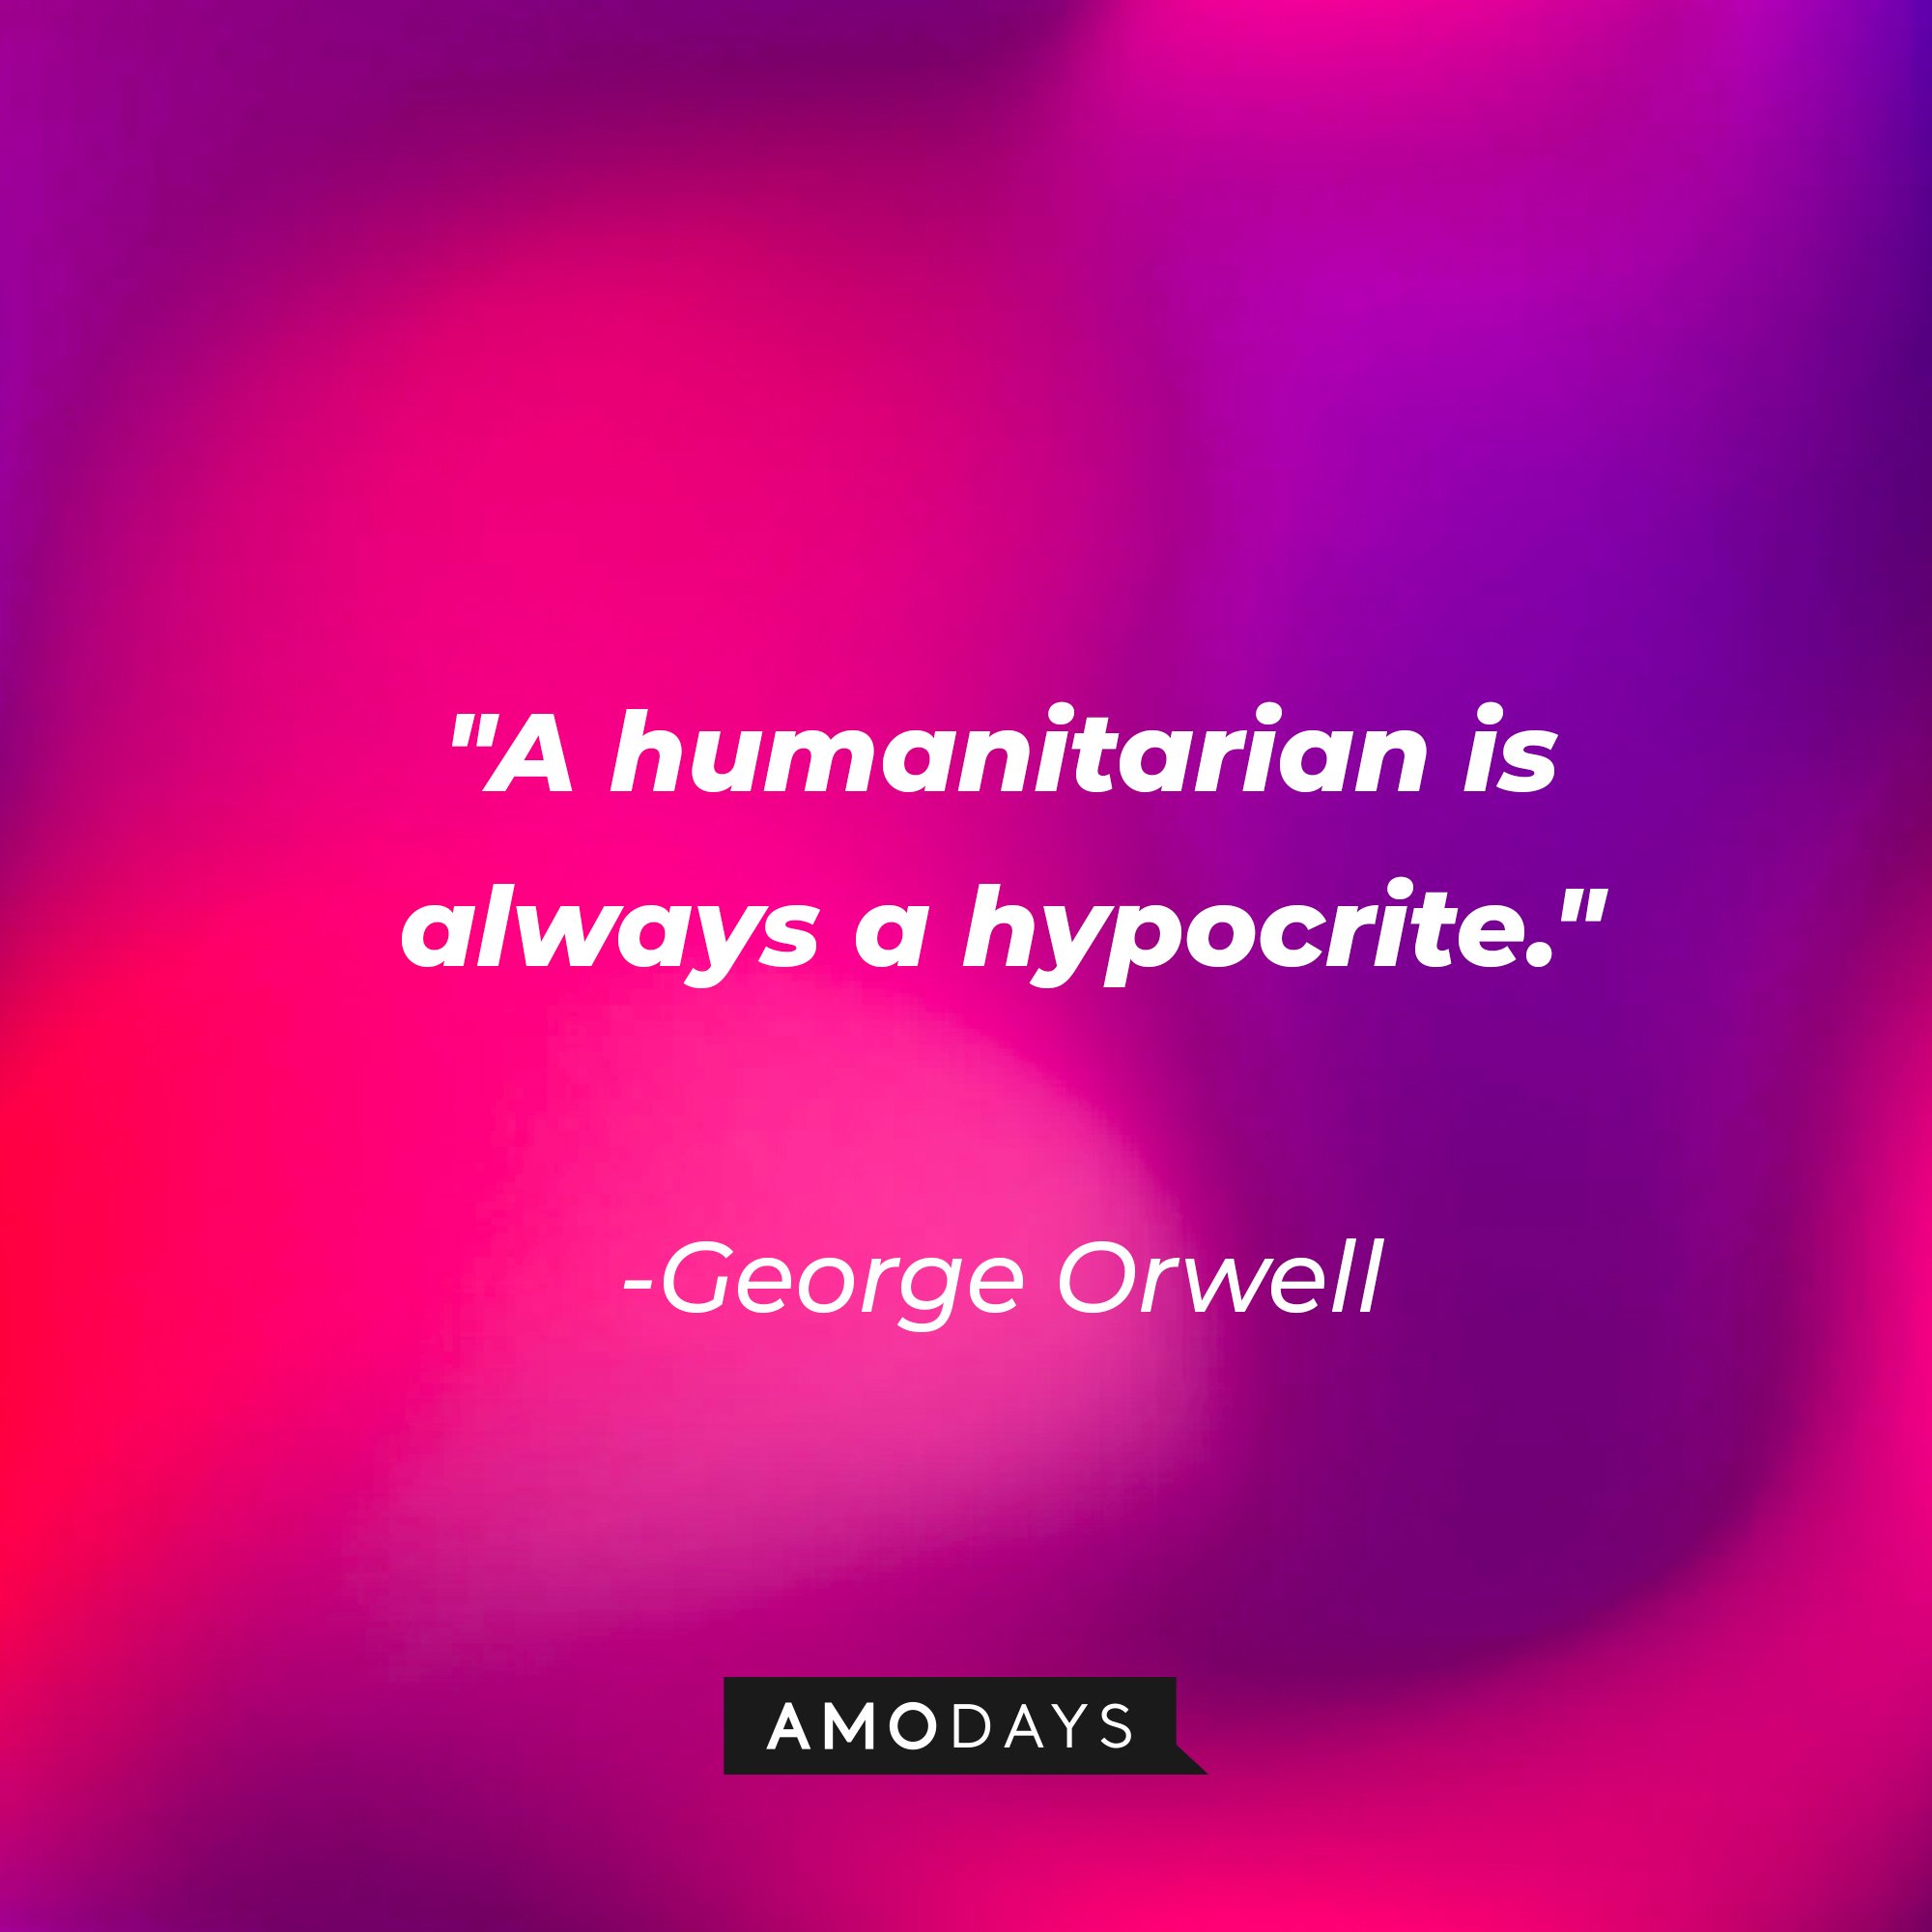 George Orwell's quote:\\\\\\\\\\\\\\\\u00a0"A humanitarian is always a hypocrite."\\\\\\\\\\\\\\\\u00a0| Image: AmoDays